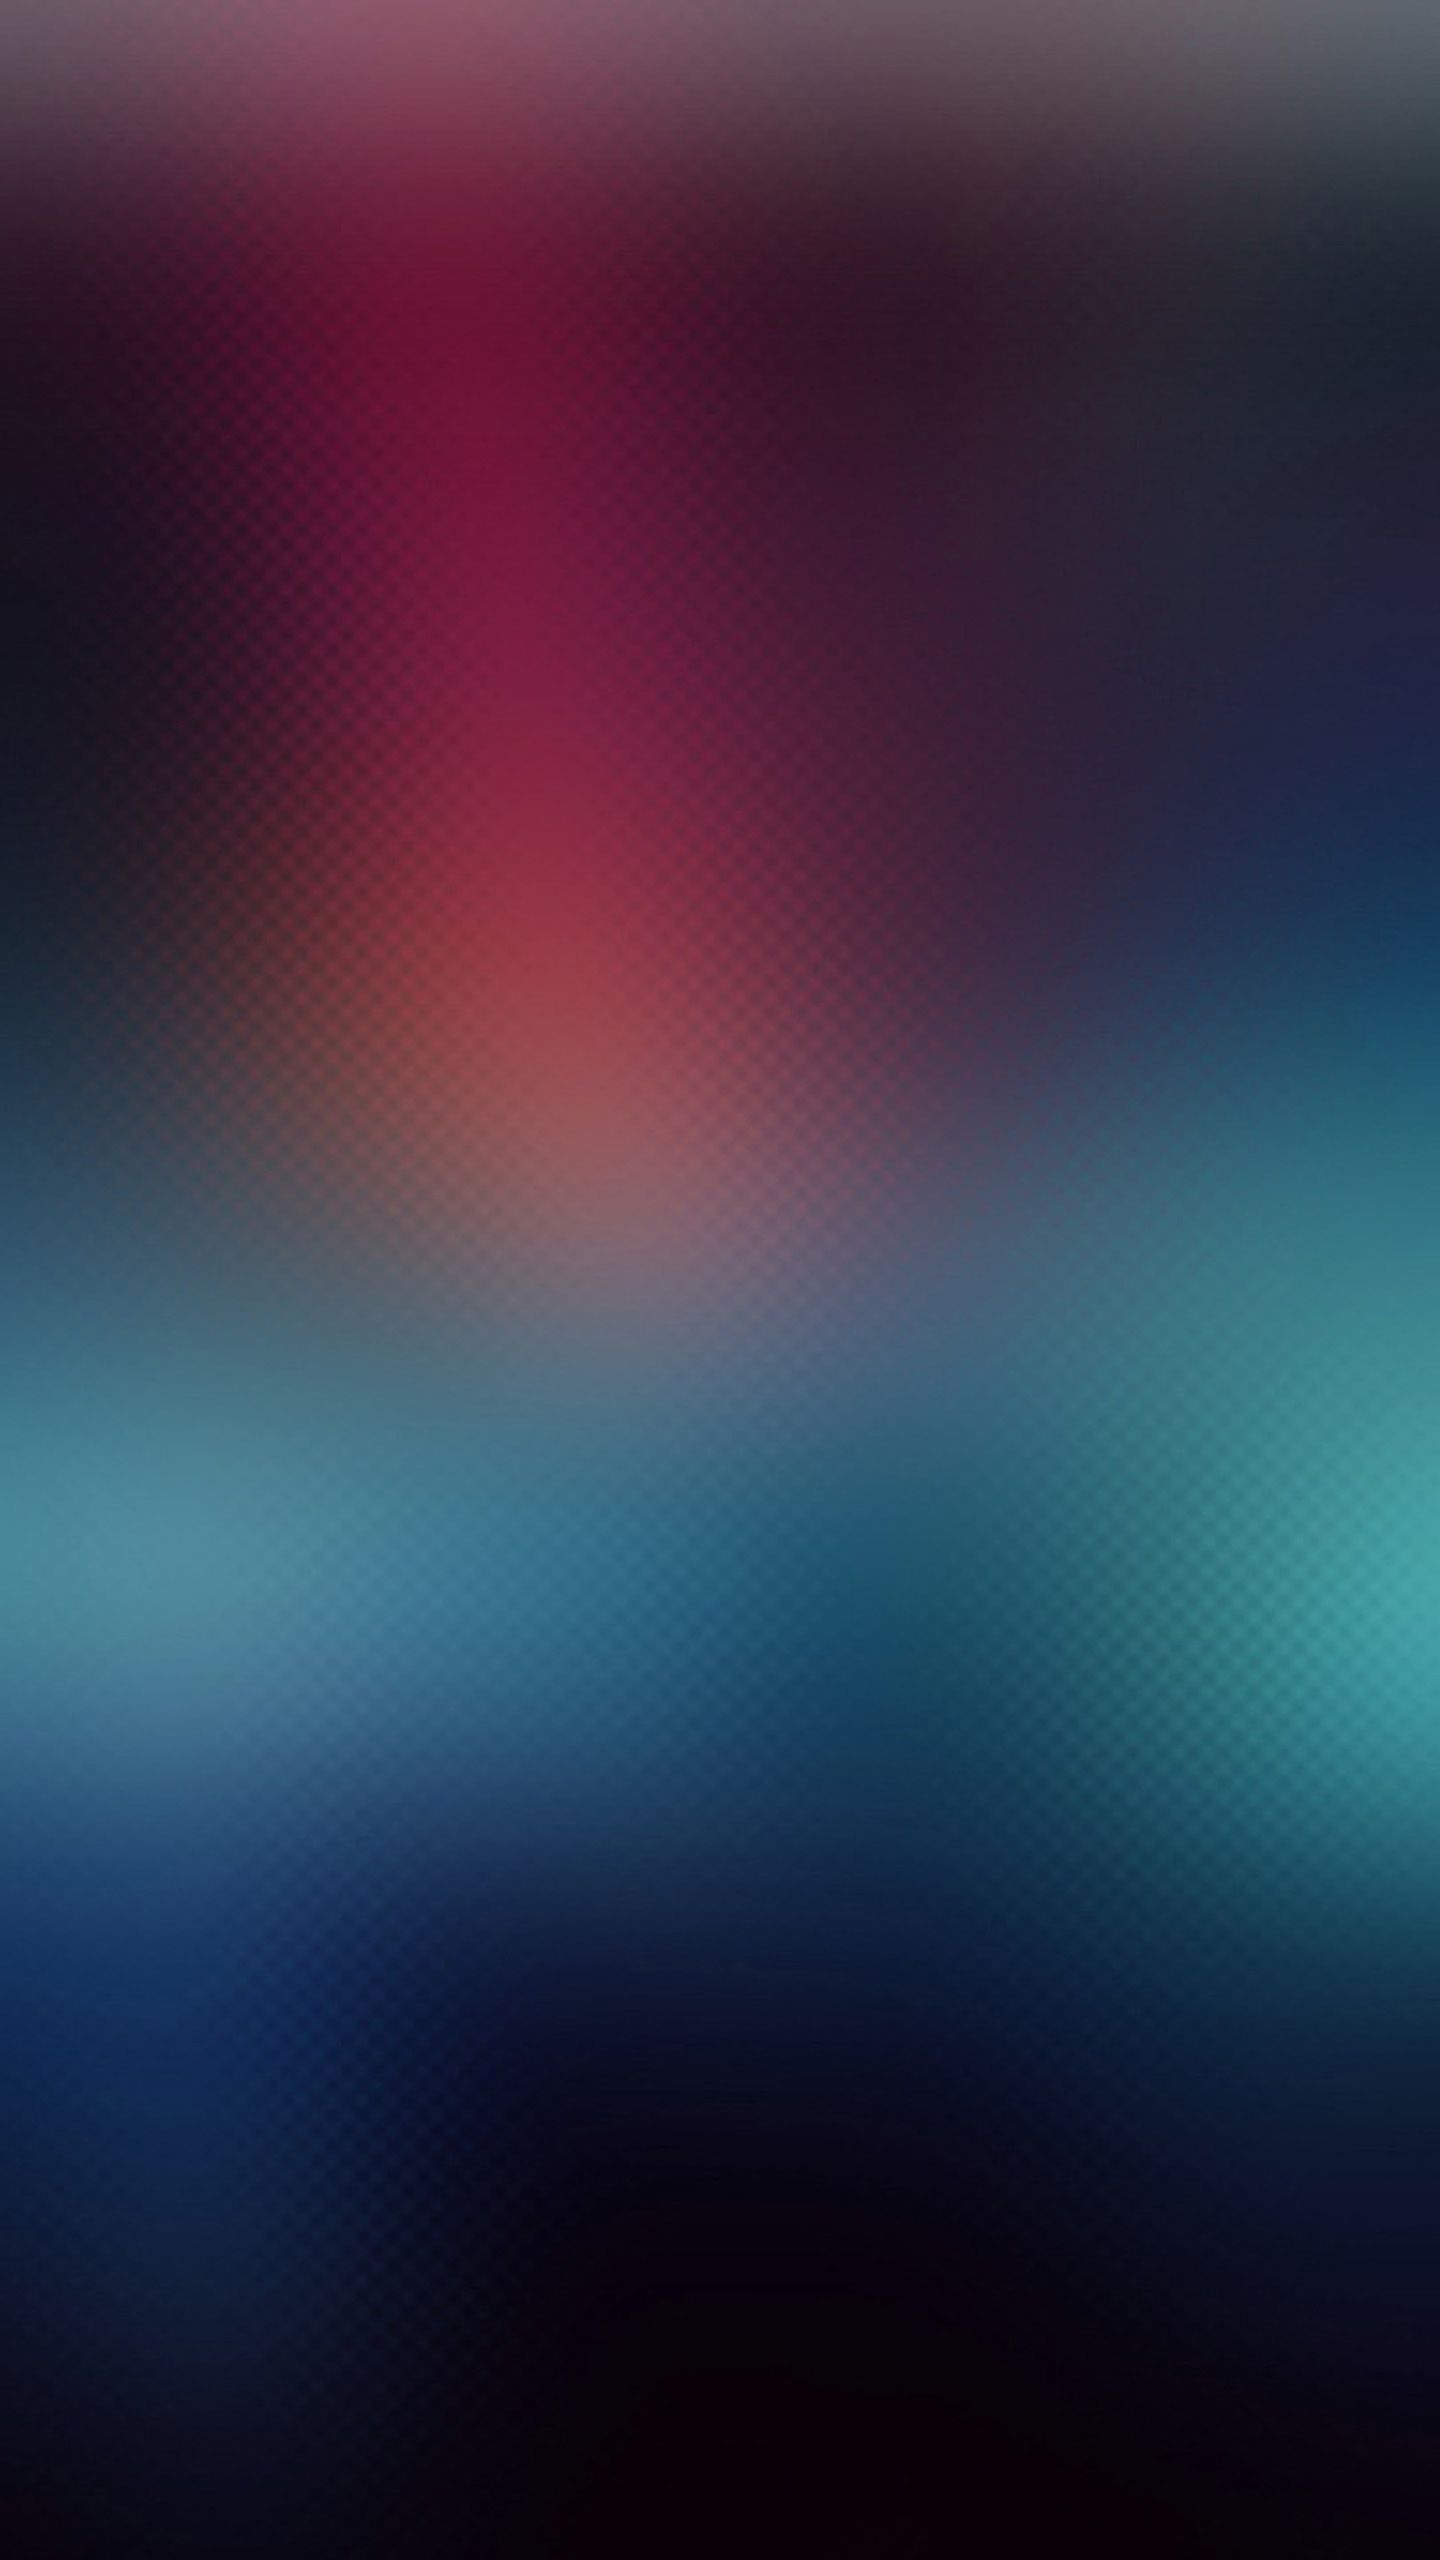 Dark Blurred Wallpapers For Iphone · Artistic Desktop HD